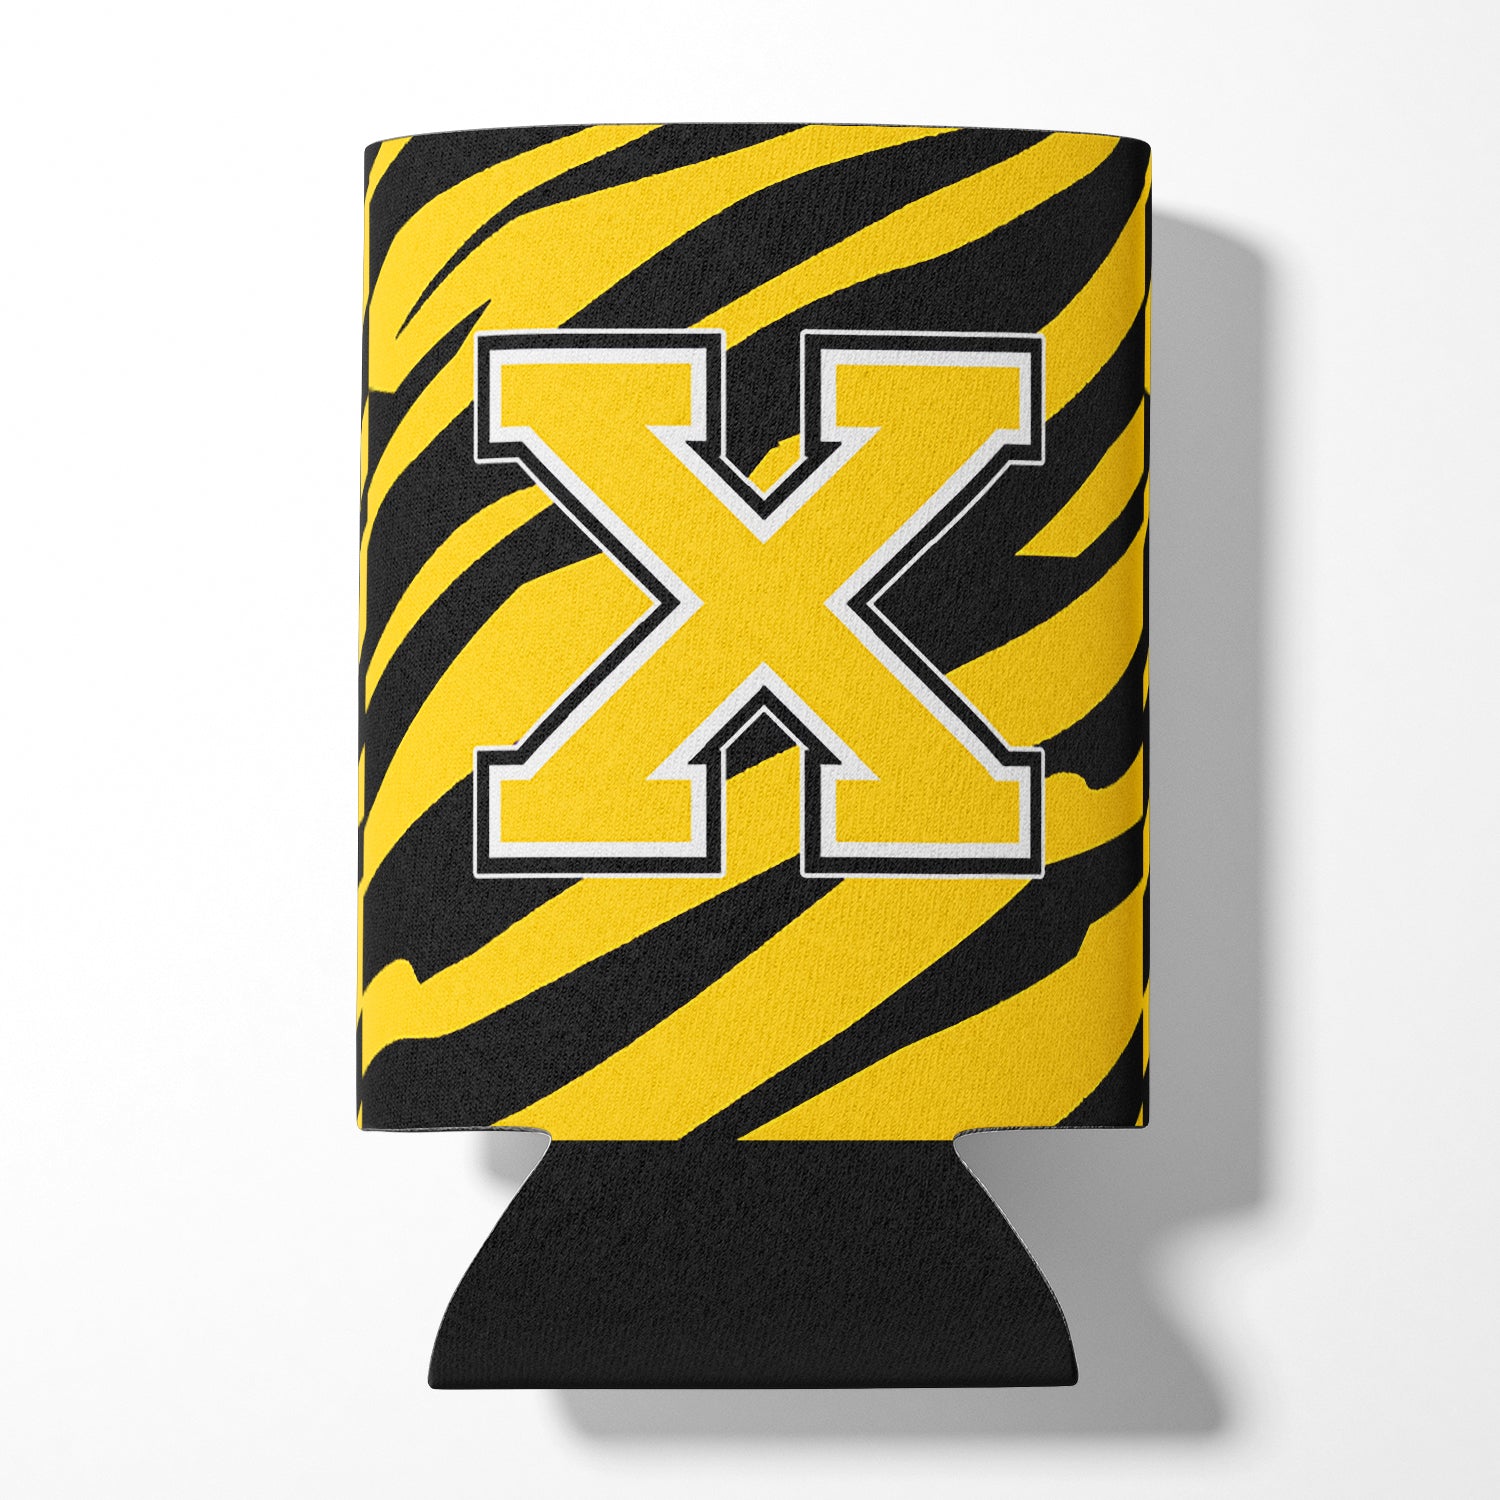 Lettre X Initial Monogram - Tiger Stripe - Black Gold Can Beverage Insulator Hugger